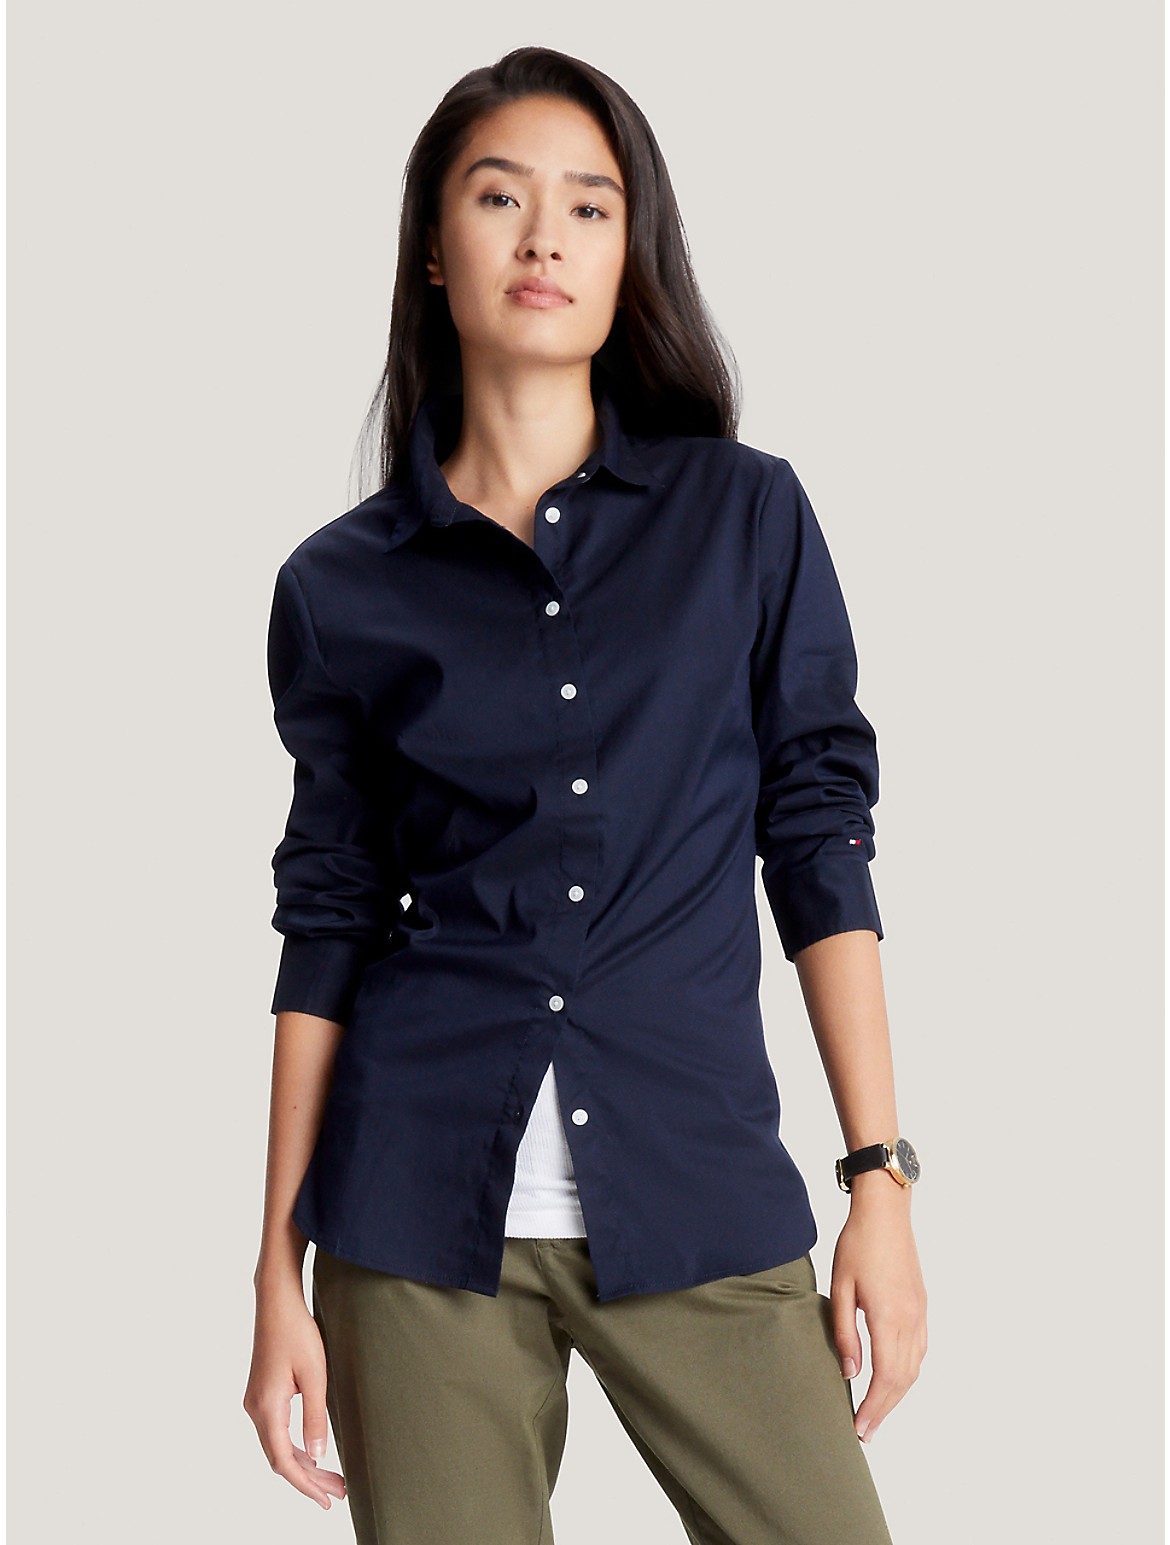 Tommy Hilfiger Women's Slim Fit Solid Shirt